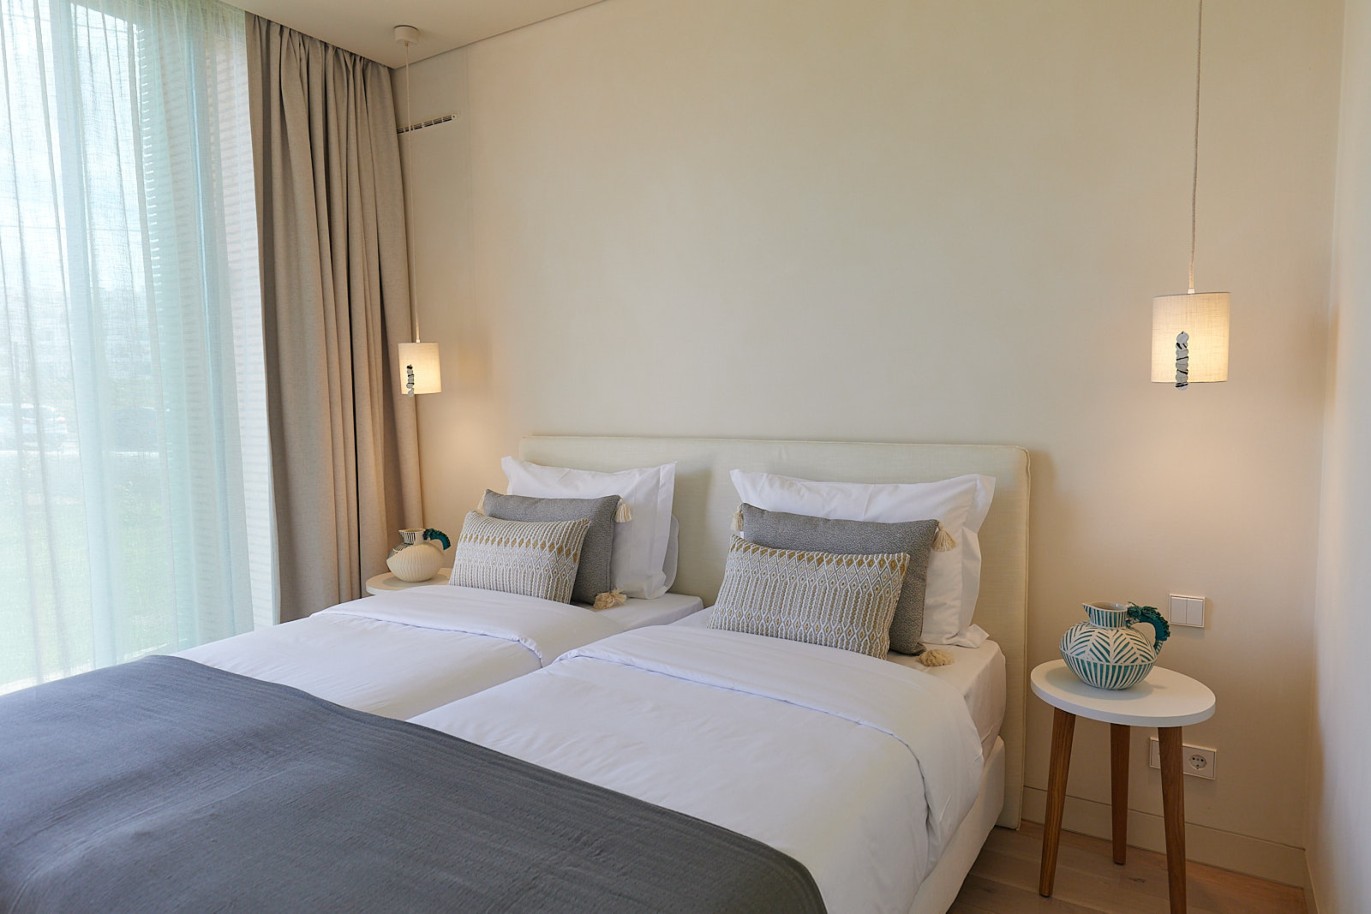 2 bedroom apartment in resort, for sale in Porches, Algarve_230588